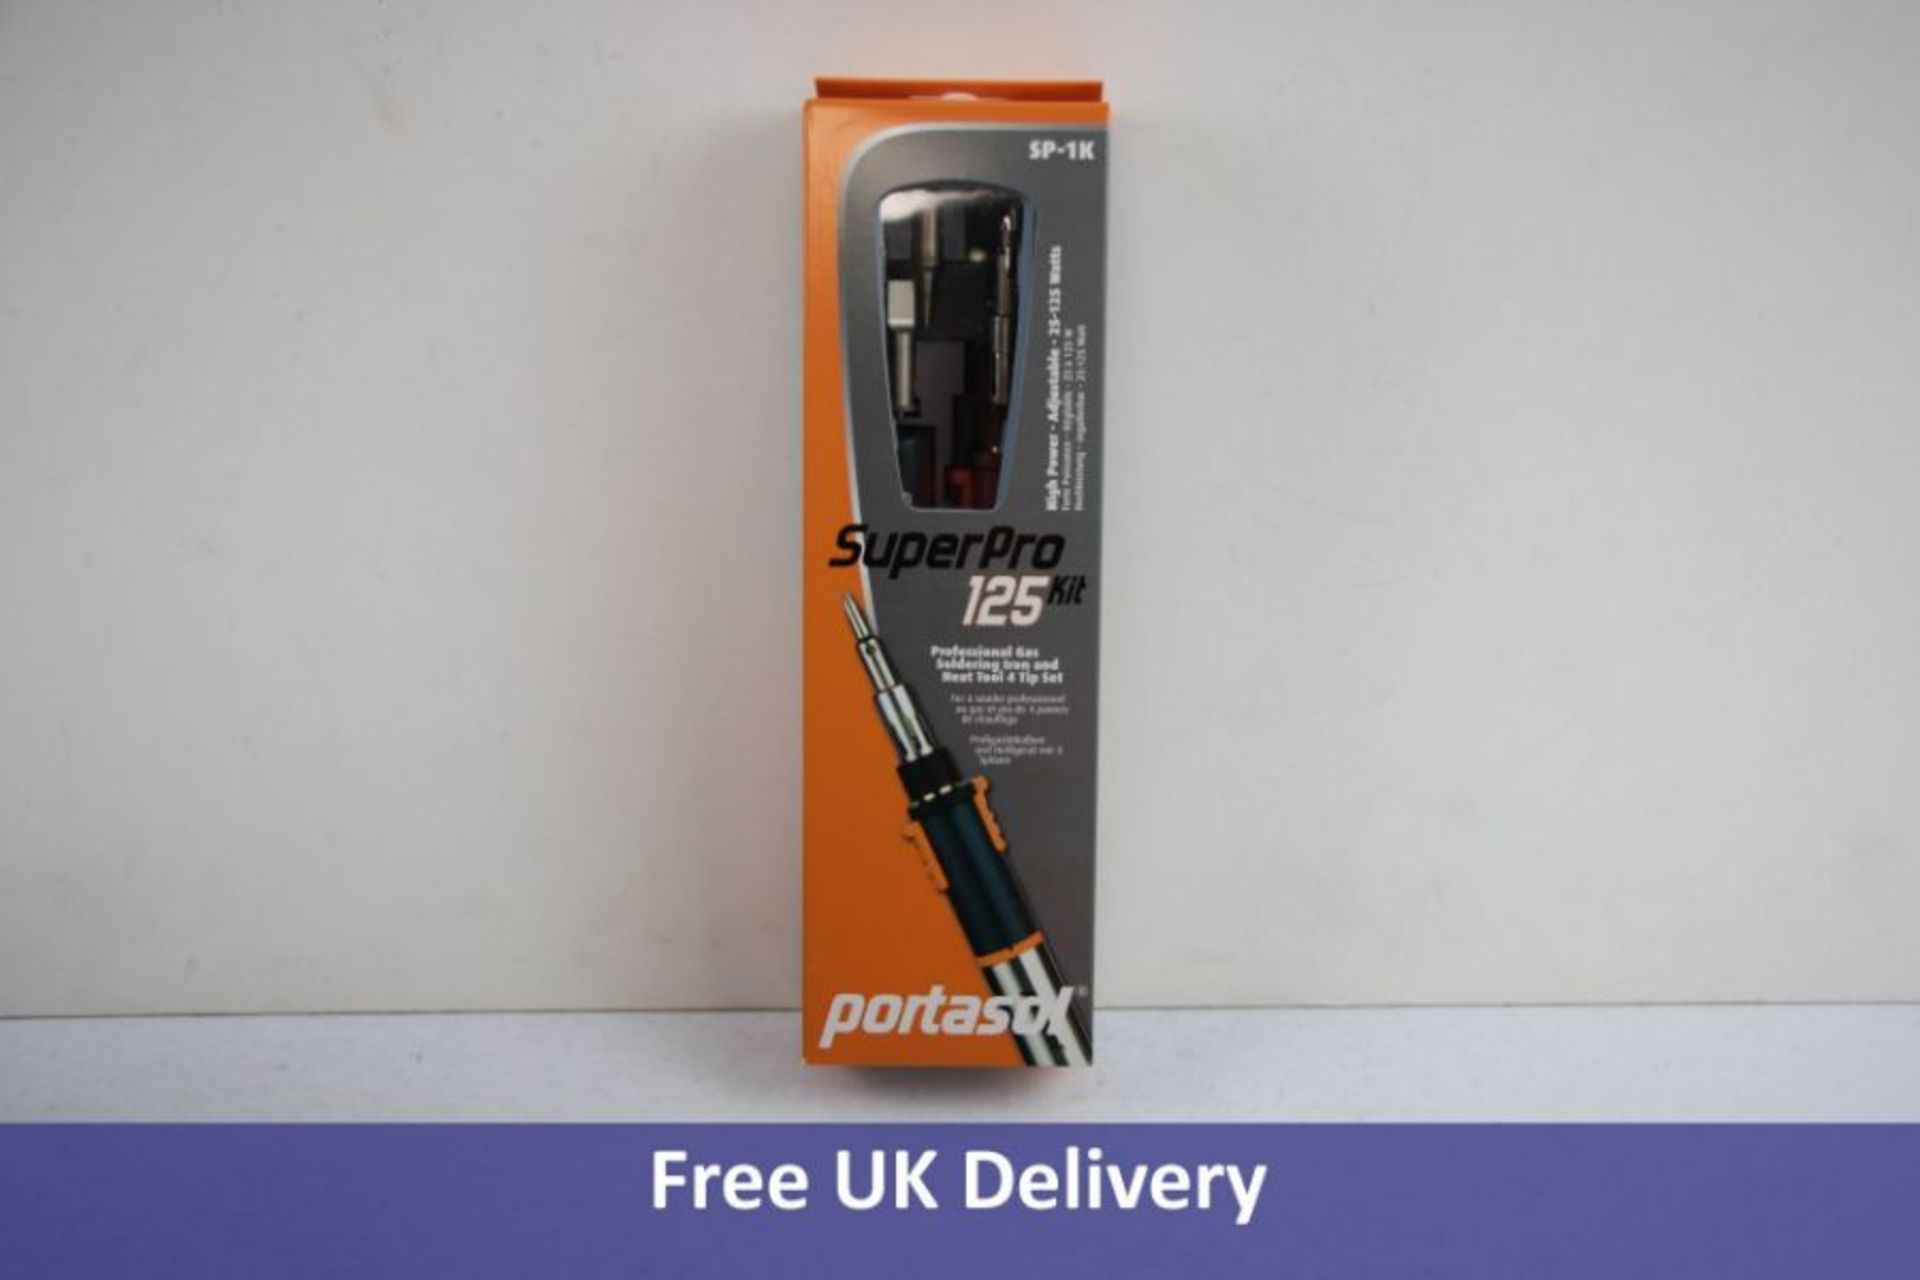 Portasol Super Pro 125 KIt Professional Gas Soldering Iron and Heat Tool 4 Tip Set